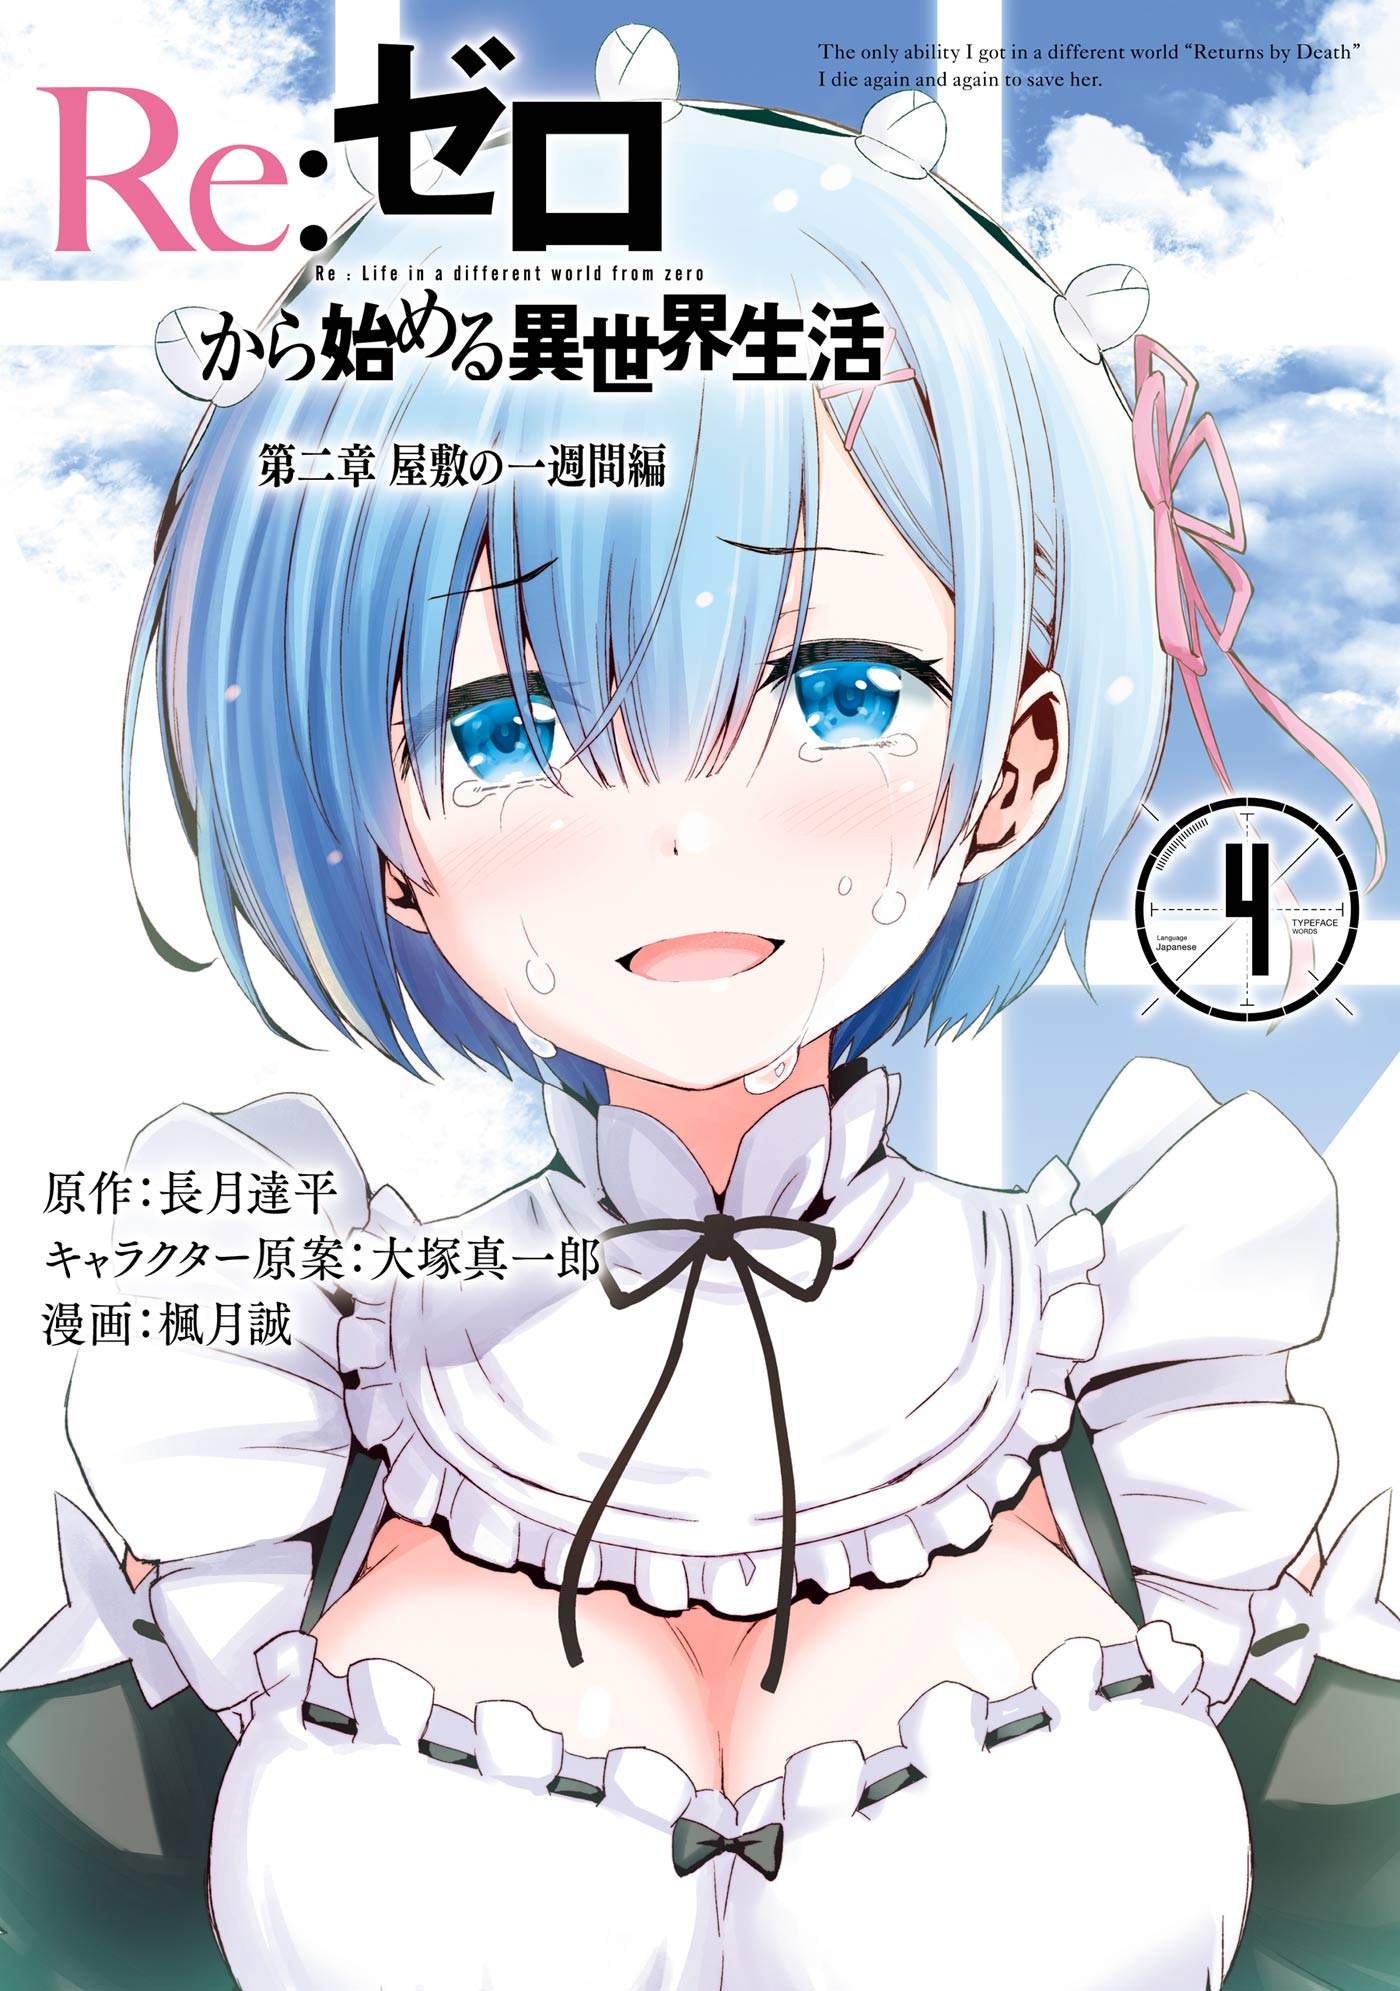 Dainishou Manga Volume 4 | Re:Zero Wiki | Fandom